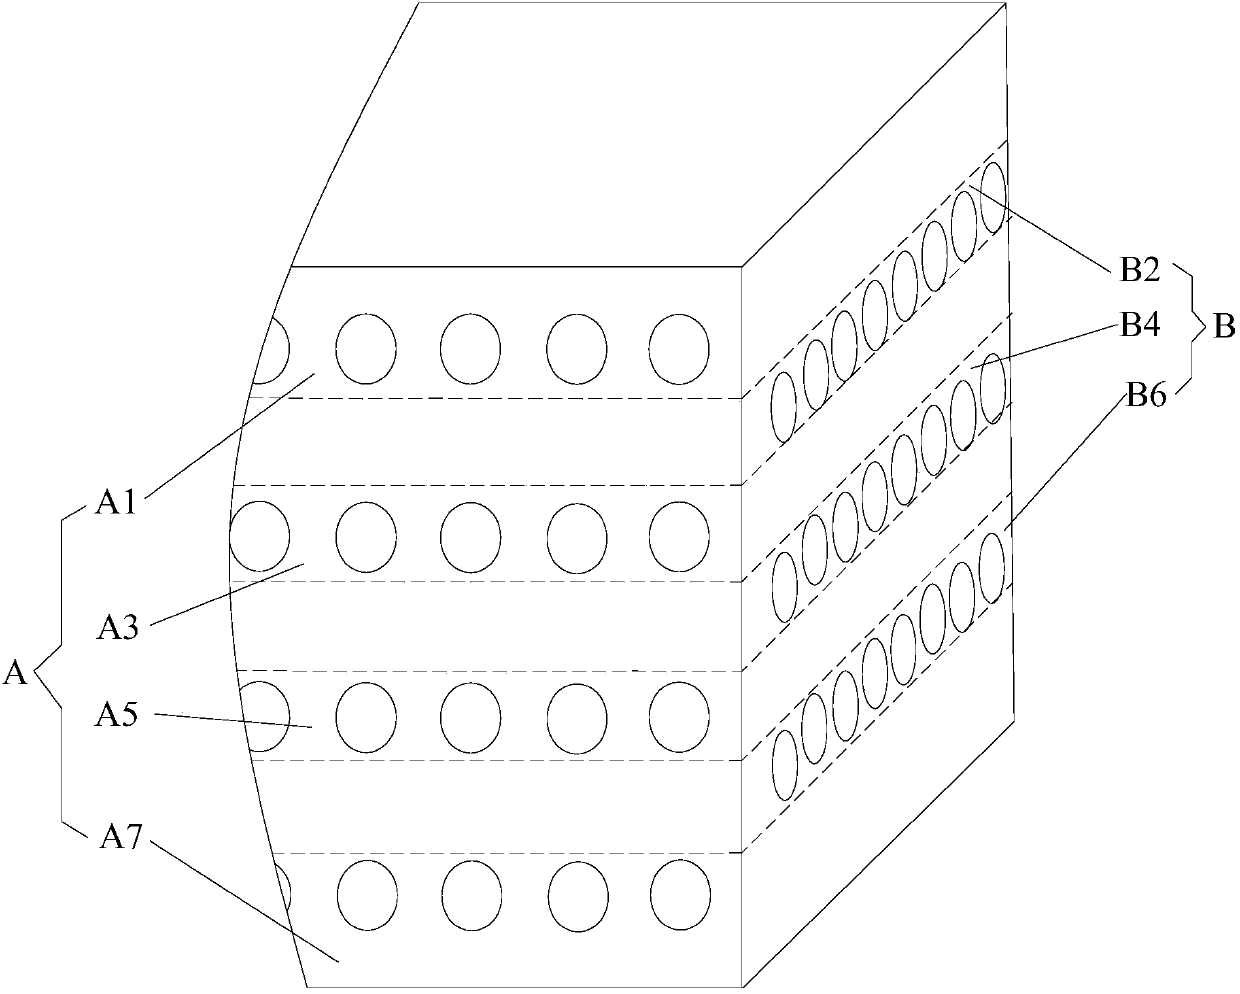 Dividing wall type heat exchanger